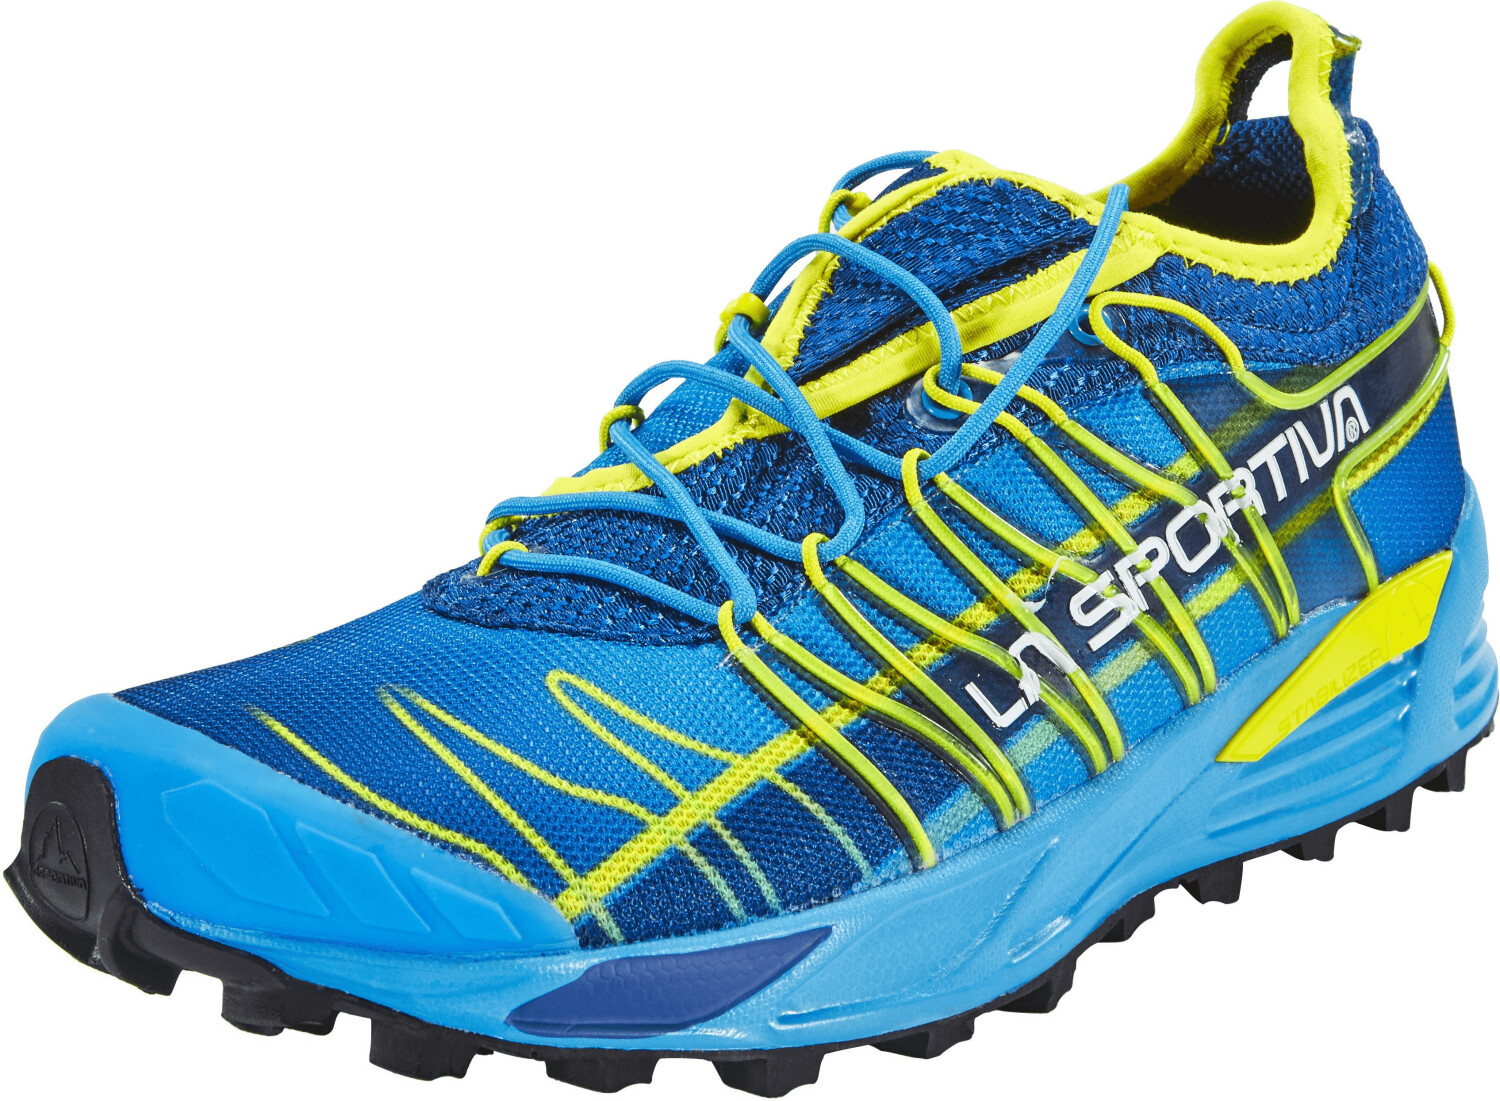 La Sportiva®  Mutant Homme - Bleu - Chaussures de Trail Running